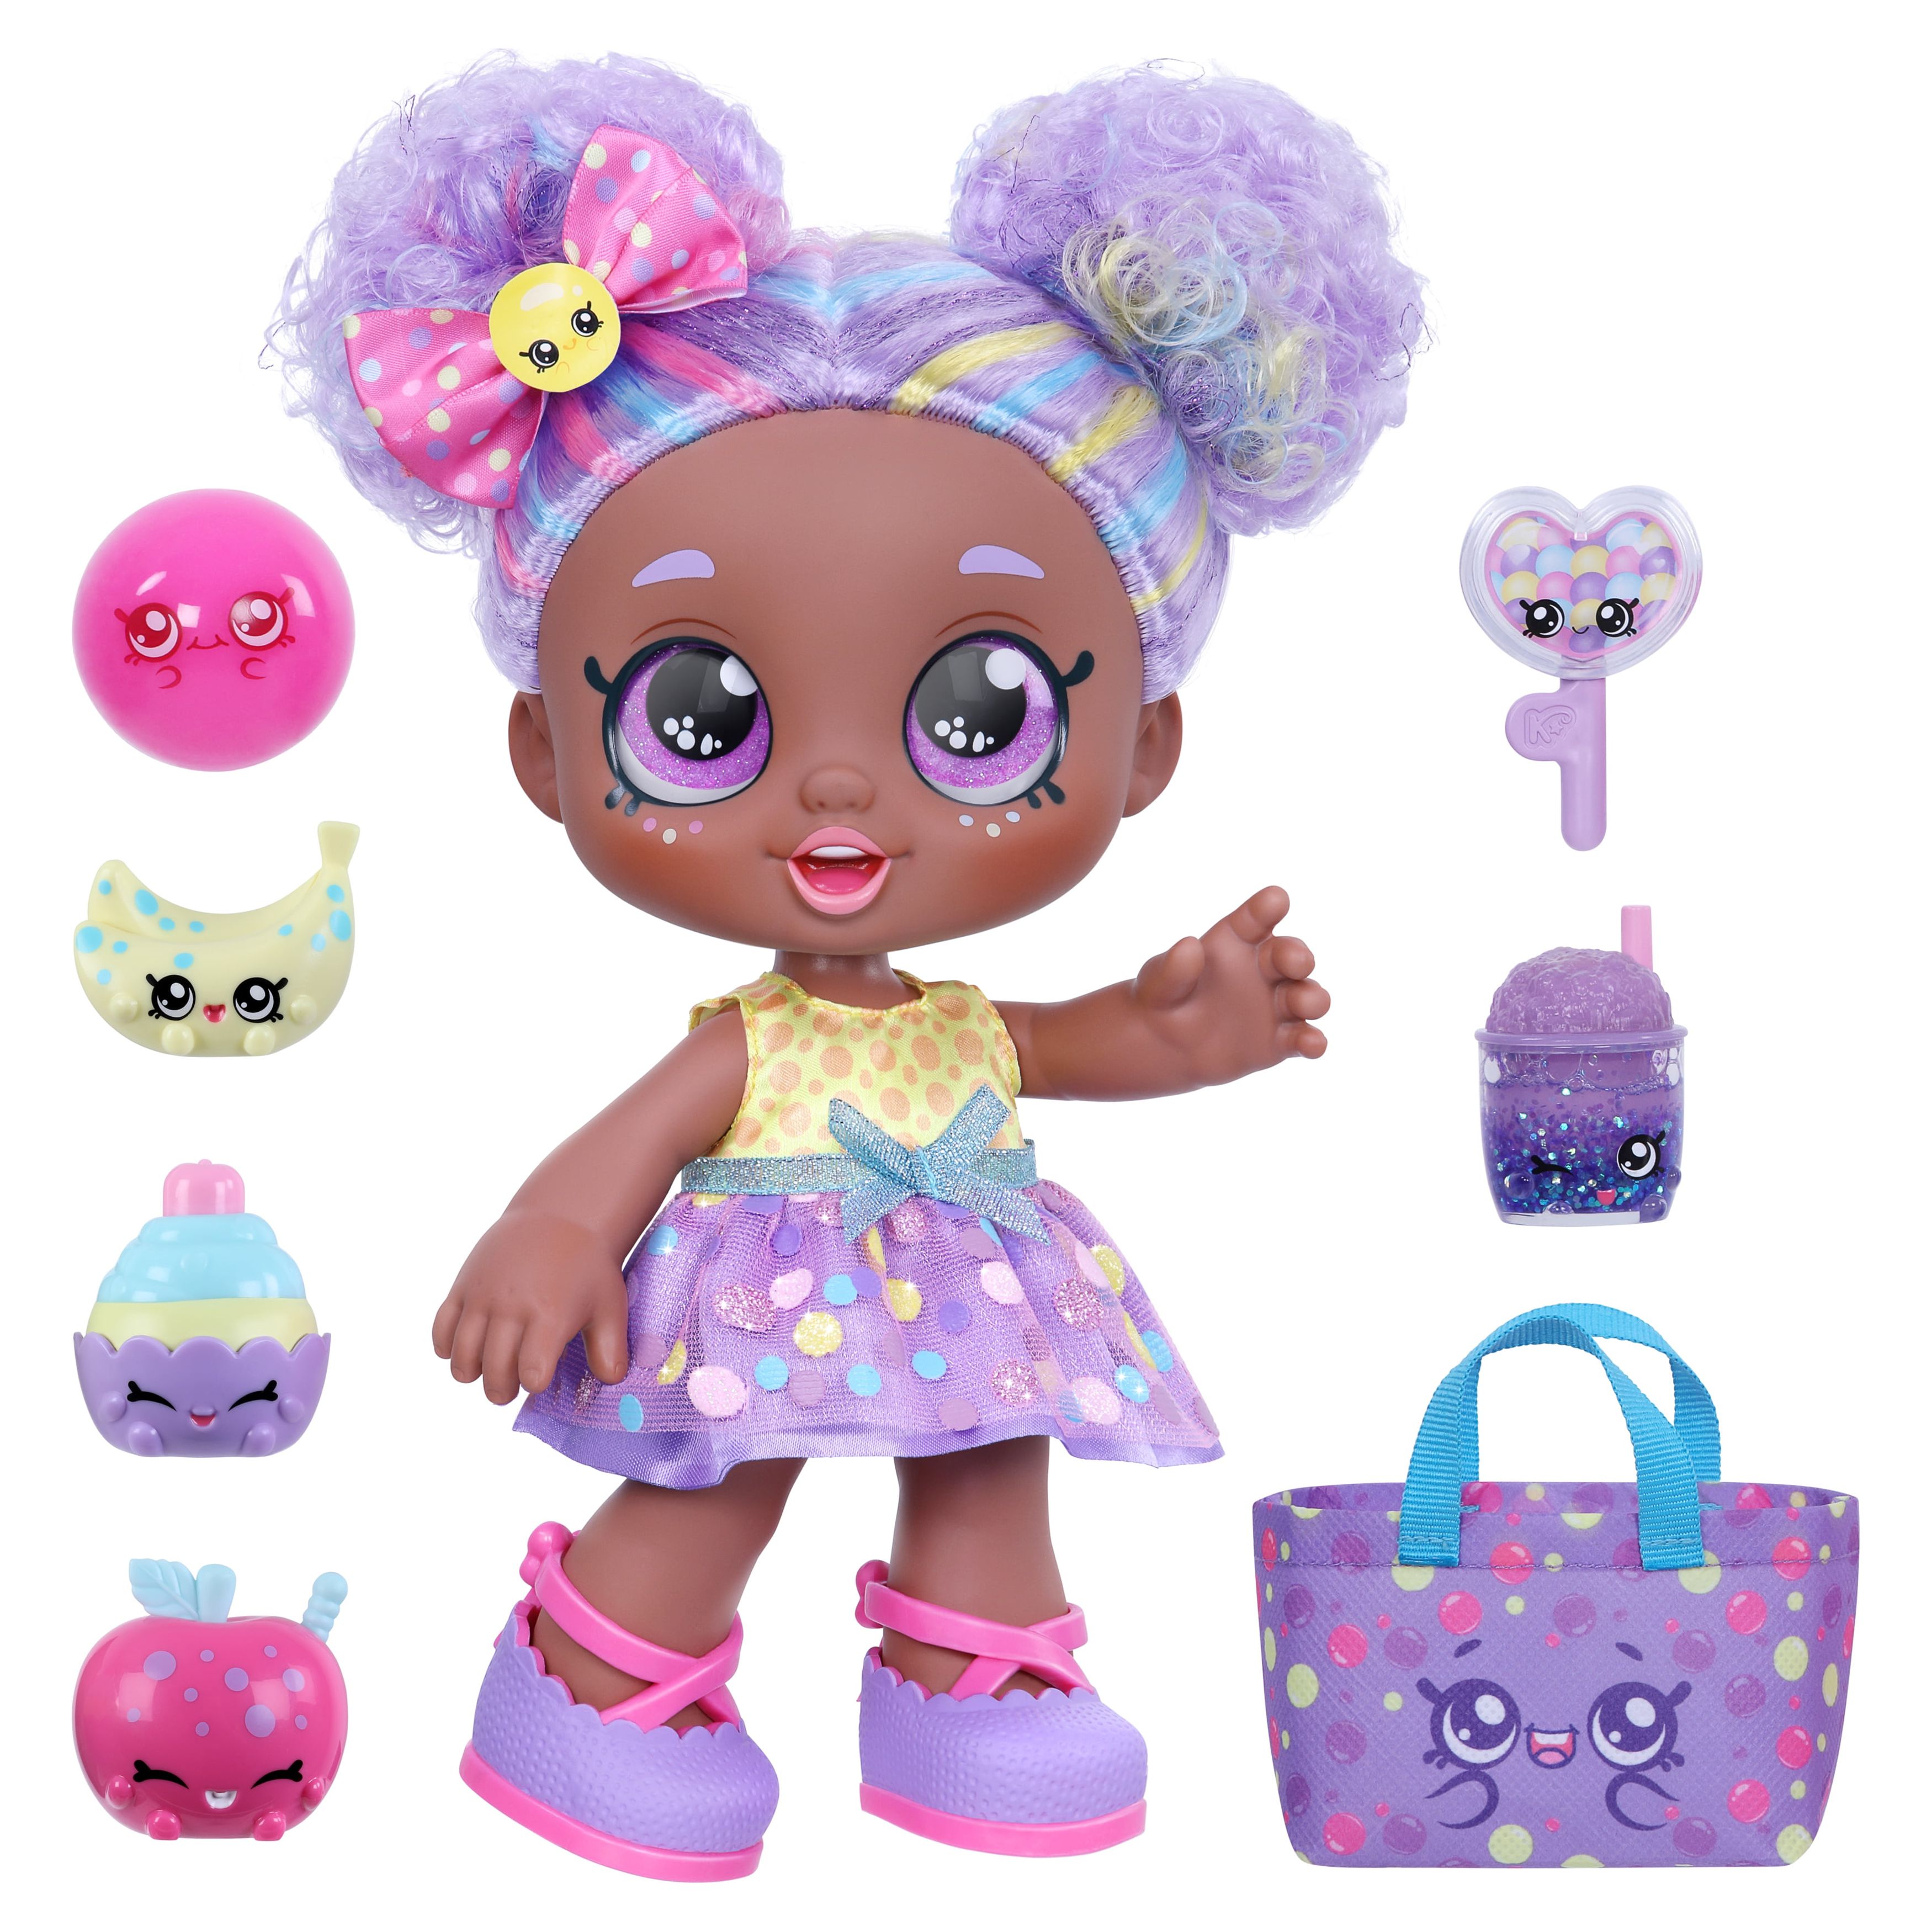 Kindi Kids Skittles 1 Shopping bag plus Shopkins Doll Playset, 8 Pieces - image 1 of 5